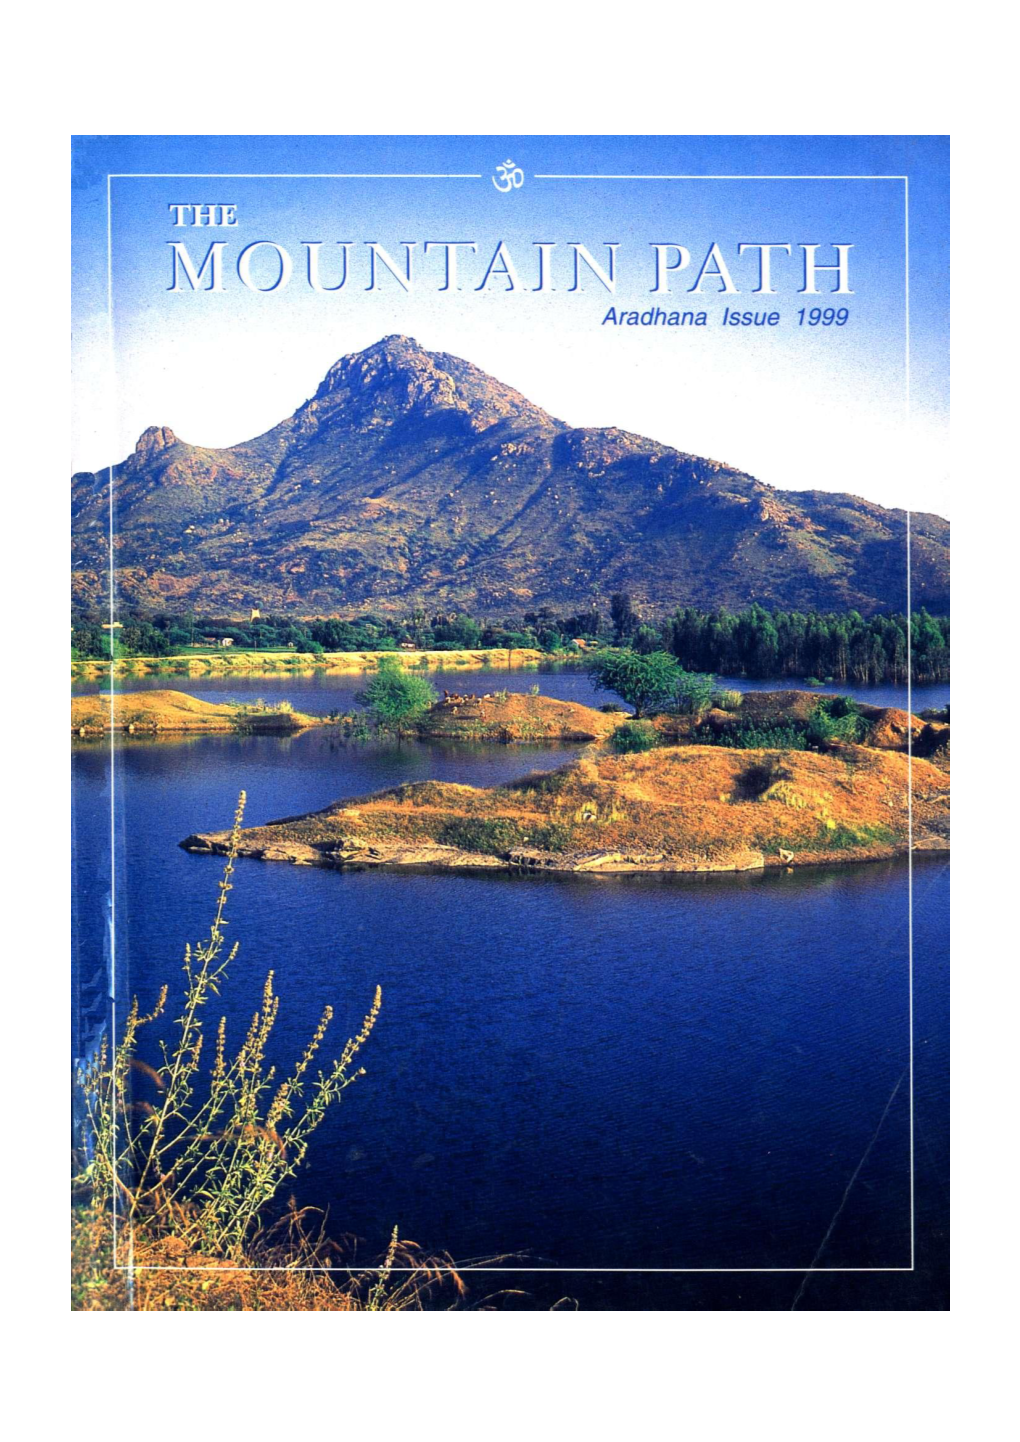 The Mountain Path Vol. 36 No. 1‑2, Aradhana 1999